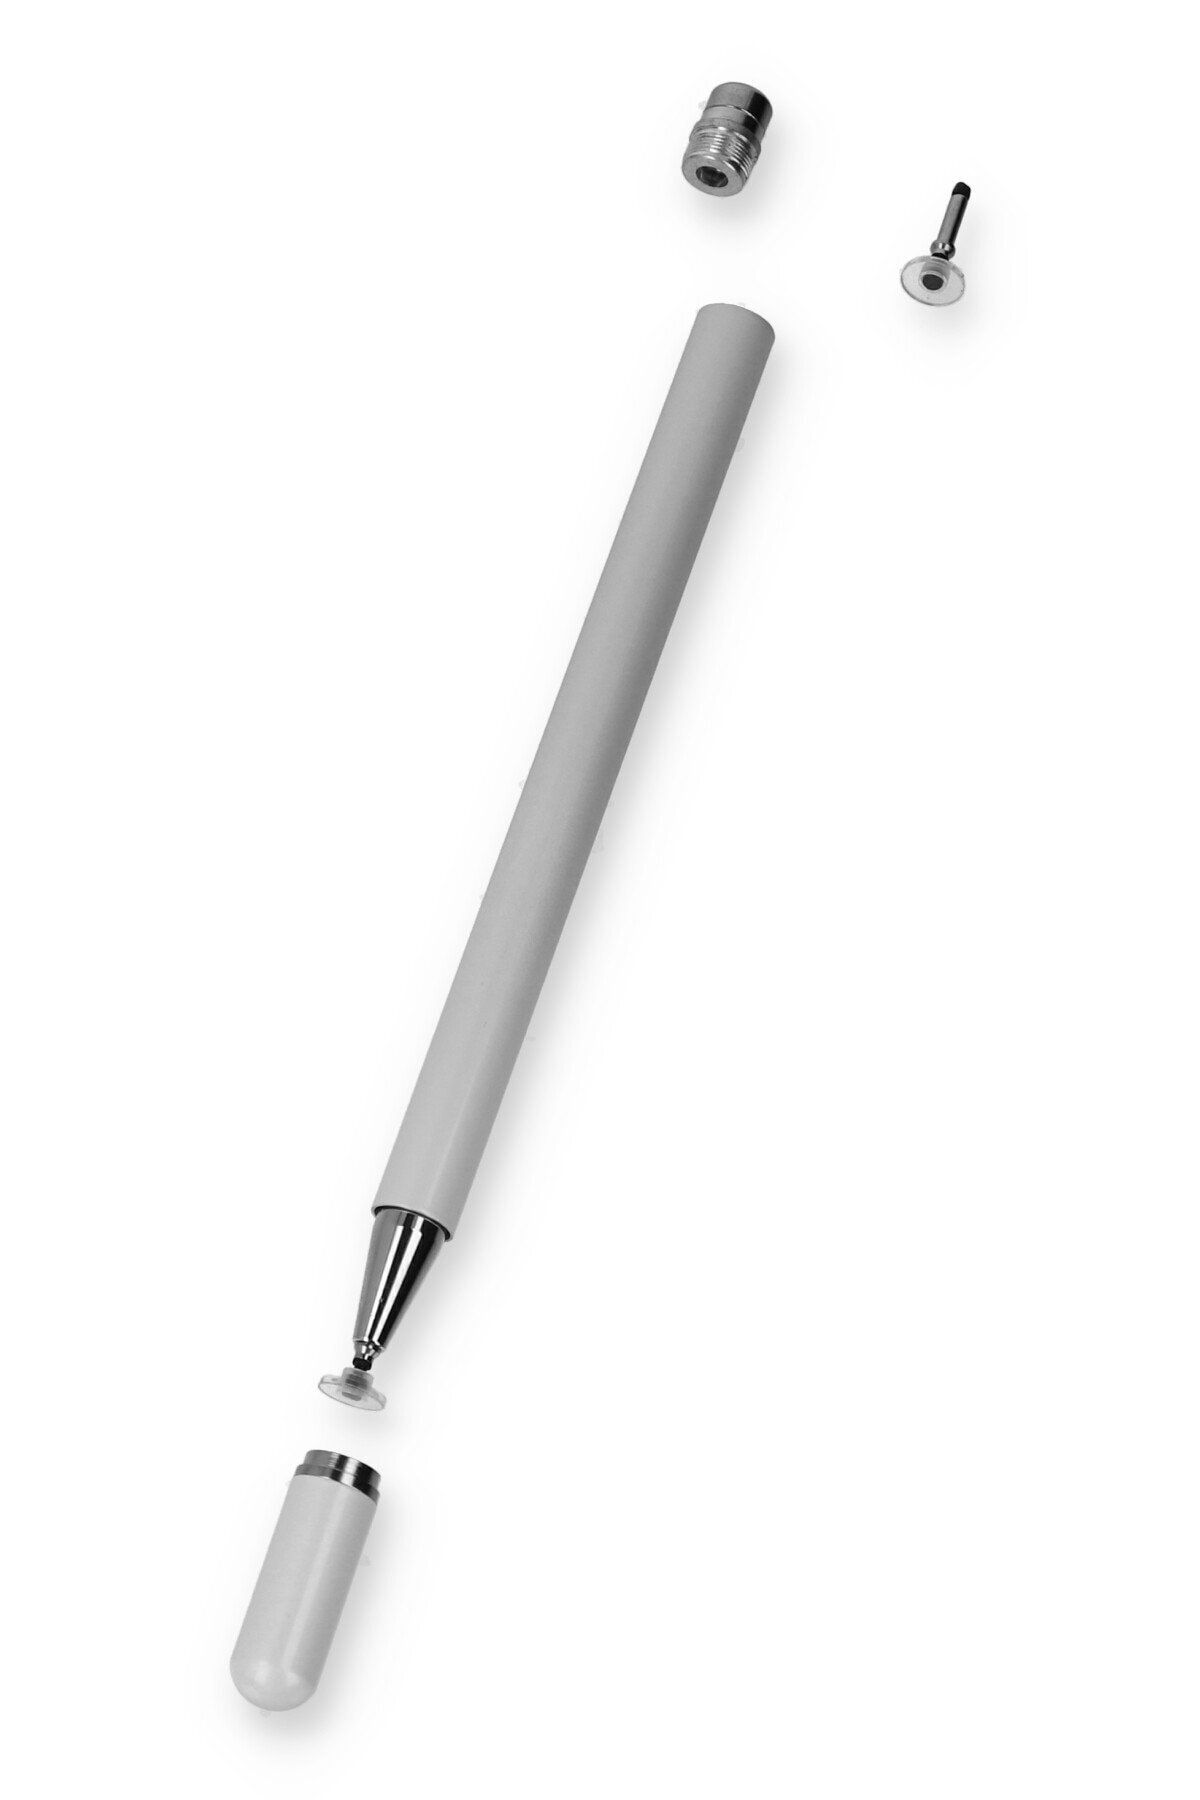 ebulduk Samsung Galaxy Tab A7 Sm-t500 Stylus Kalem Tablet Kalemi Özel Tasarım Ve Çizim Kalemi Yedek Uçlu